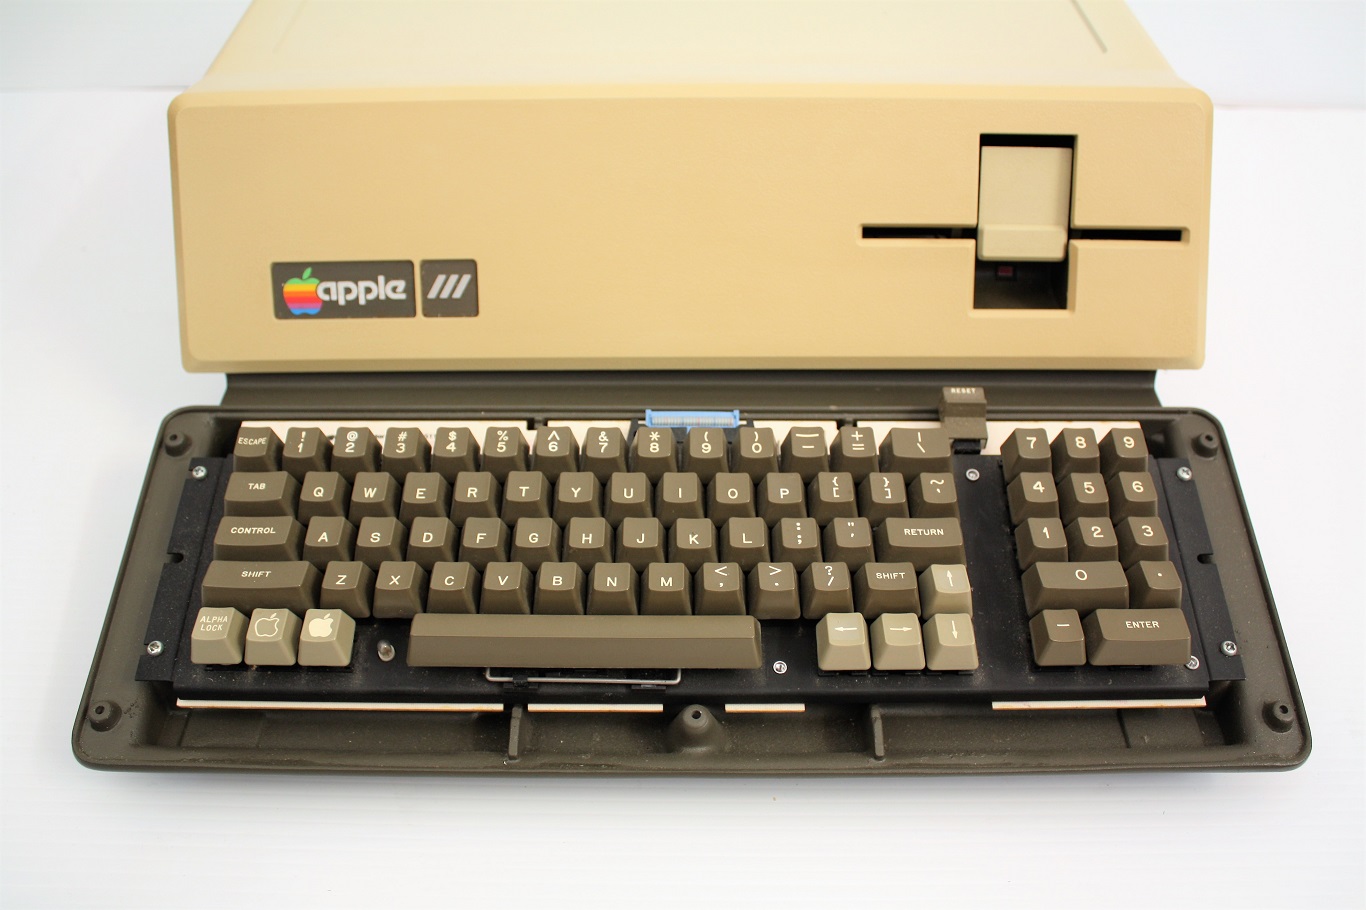 Apple III - keyboard cover removed